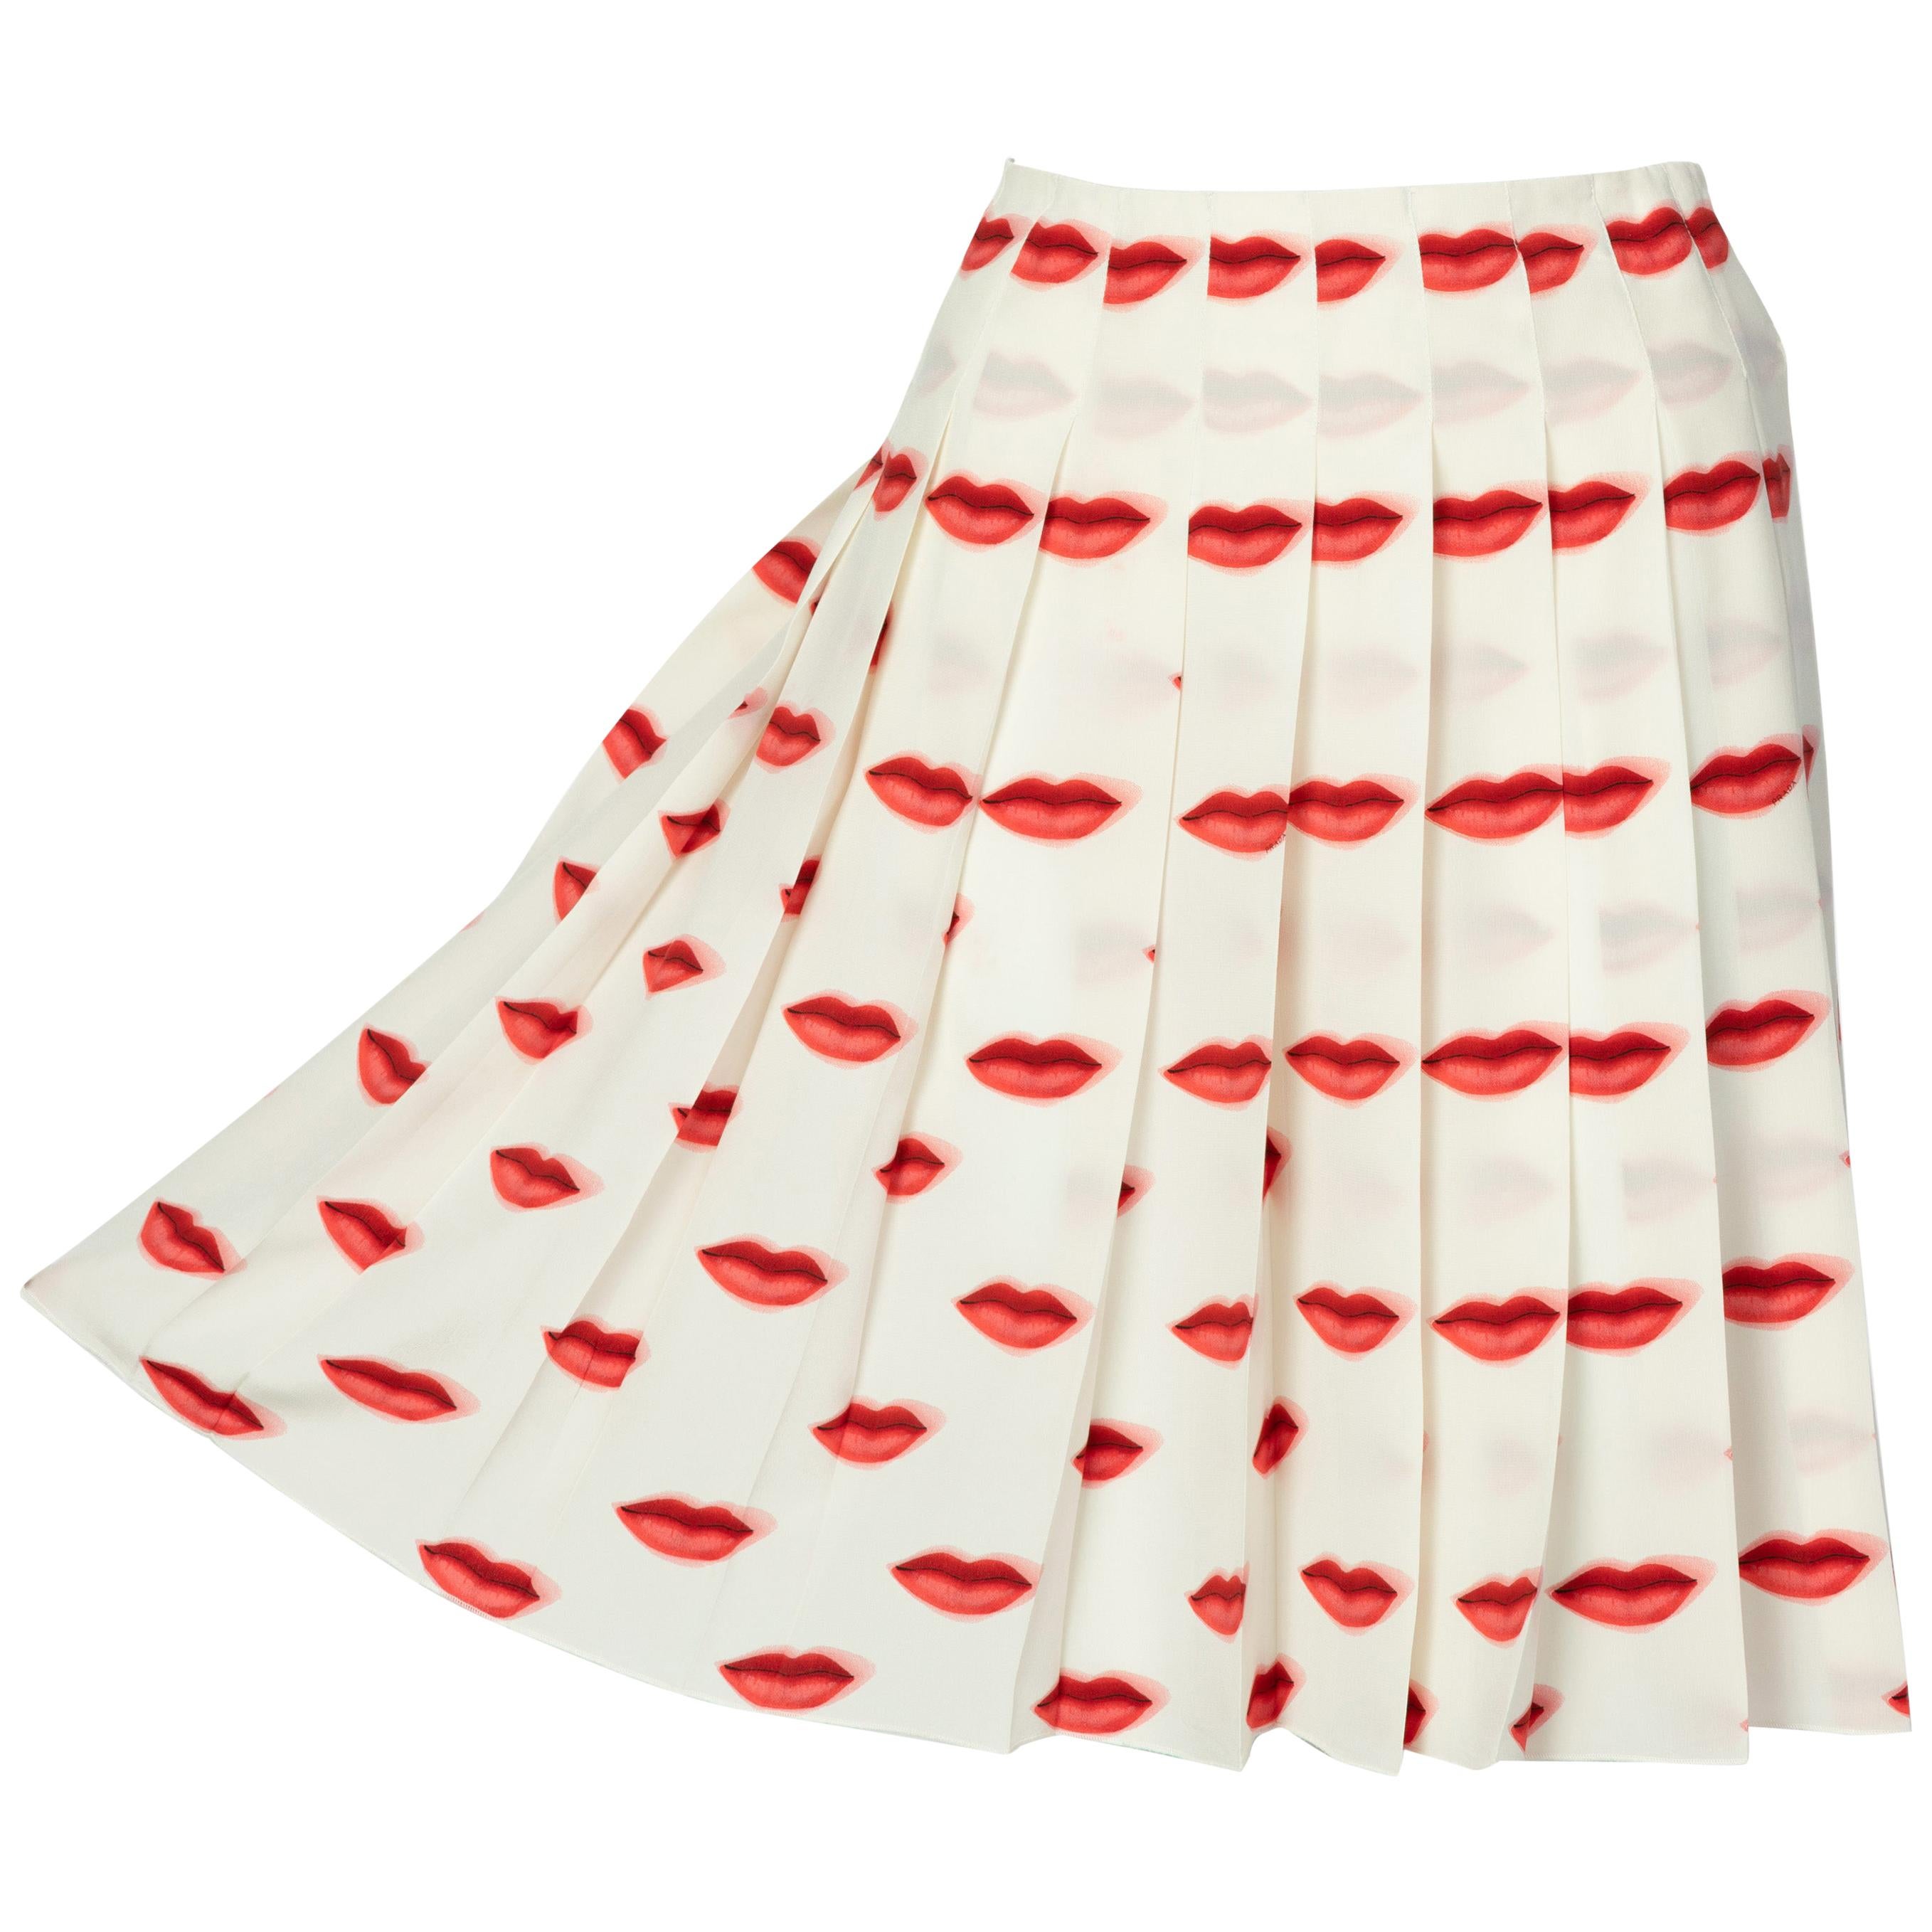 Iconic Prada Red Lip Print Pleated Skirt, Spring 2000 at 1stDibs ...